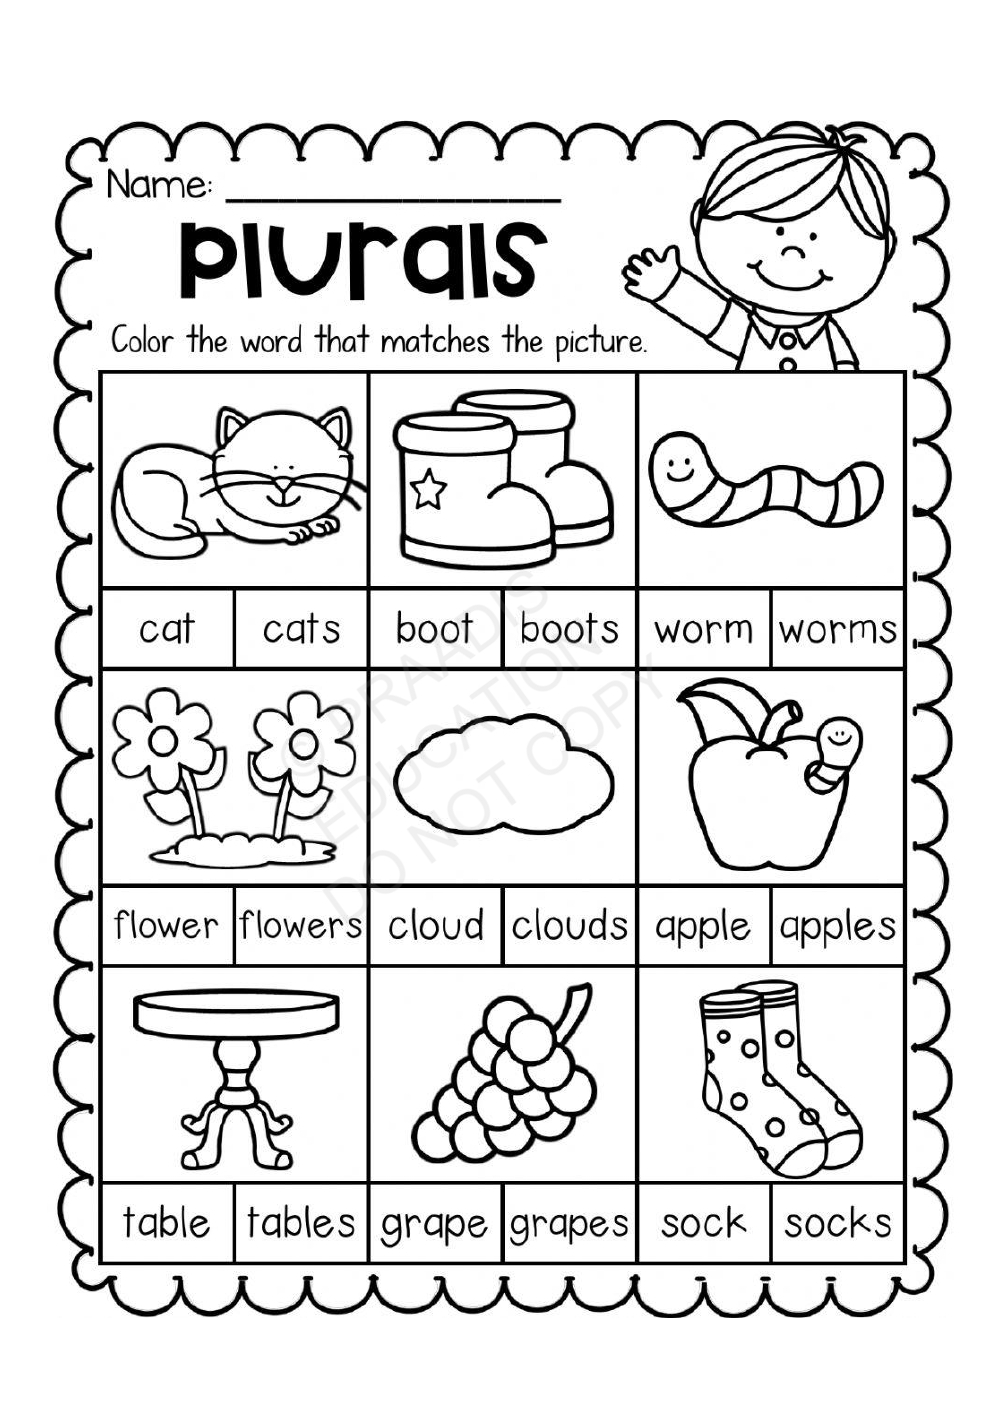 English for children 2. Plural Nouns Worksheets for Kids. Множественное число в английском языке Worksheets. Множественное число существительных Worksheets. Plurals for Beginners.